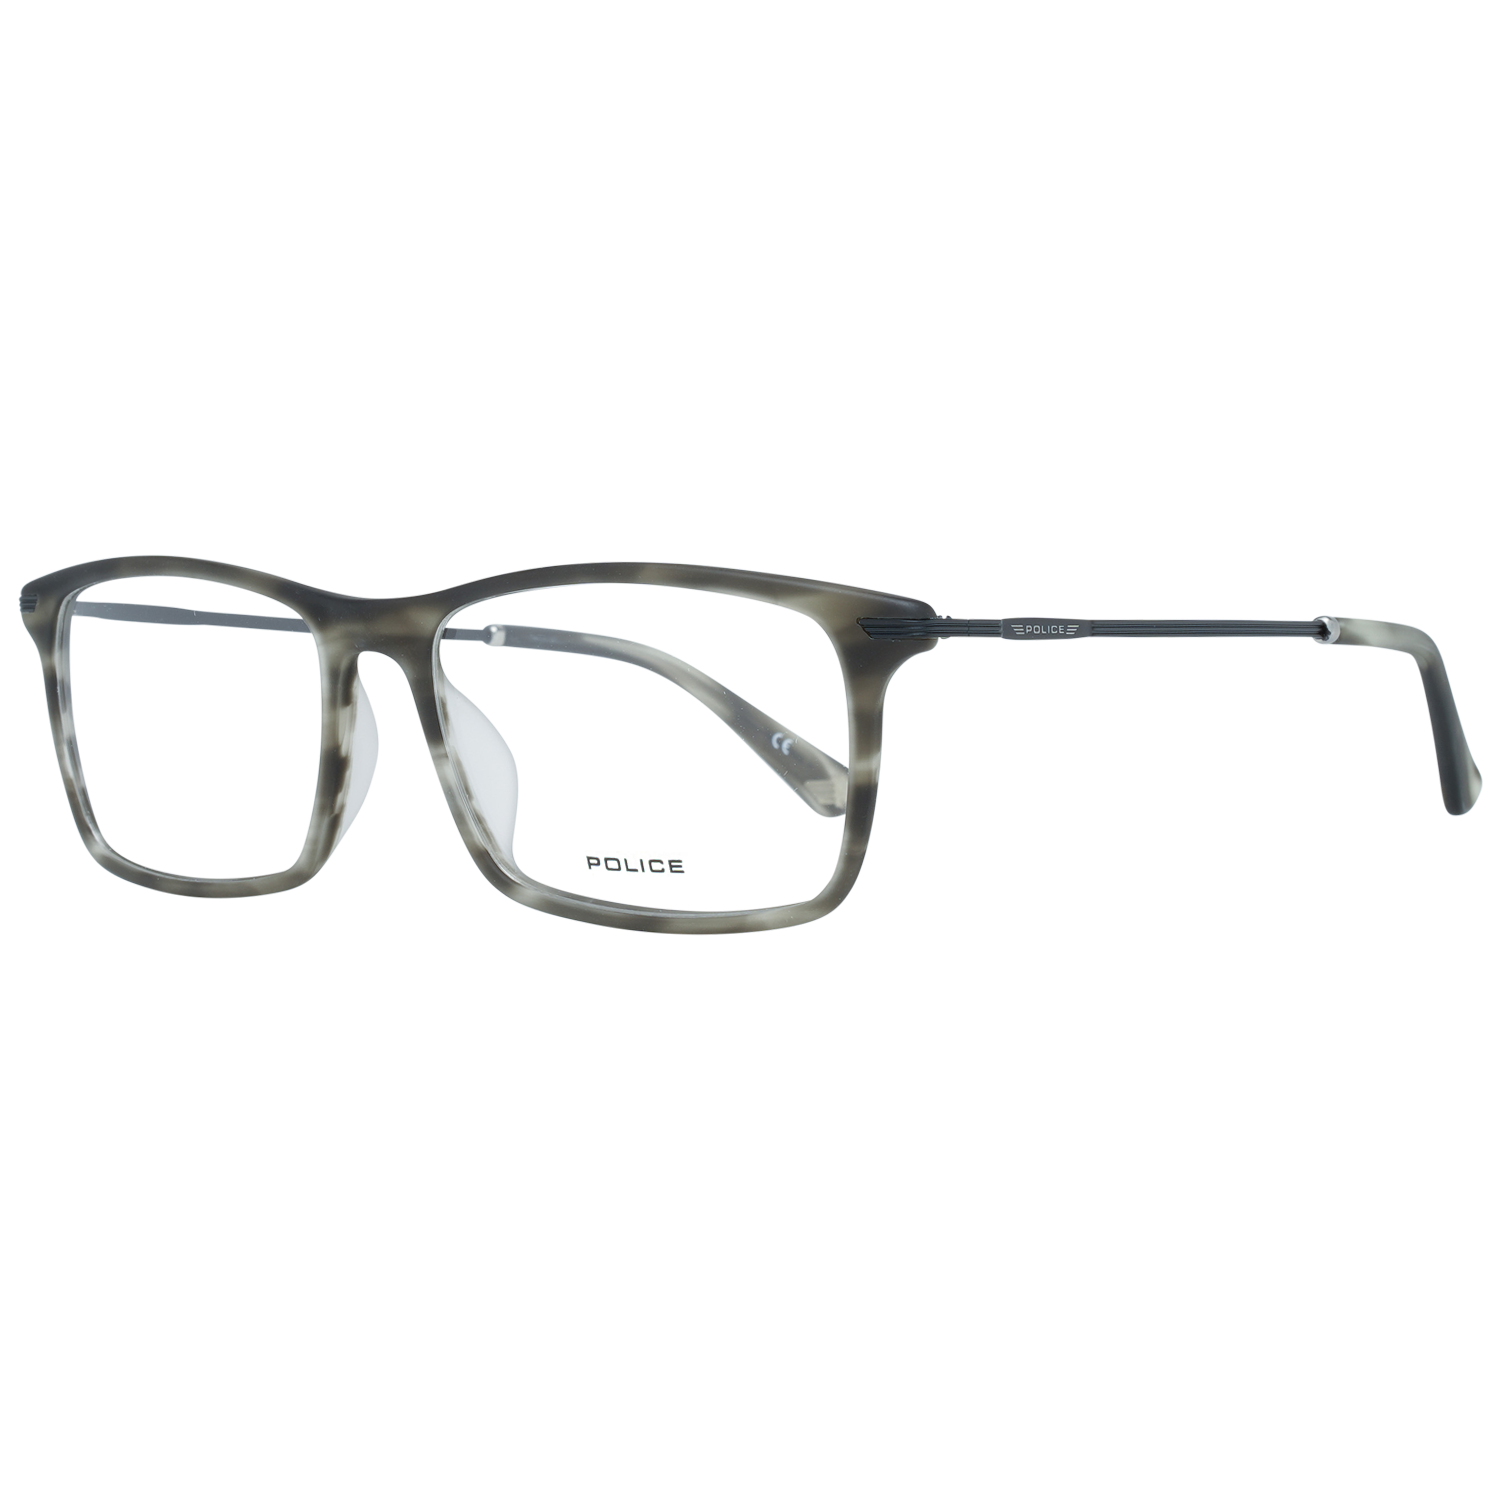 Police Frames Police Glasses Frames VPL473 4ATM 54 Eyeglasses Eyewear UK USA Australia 